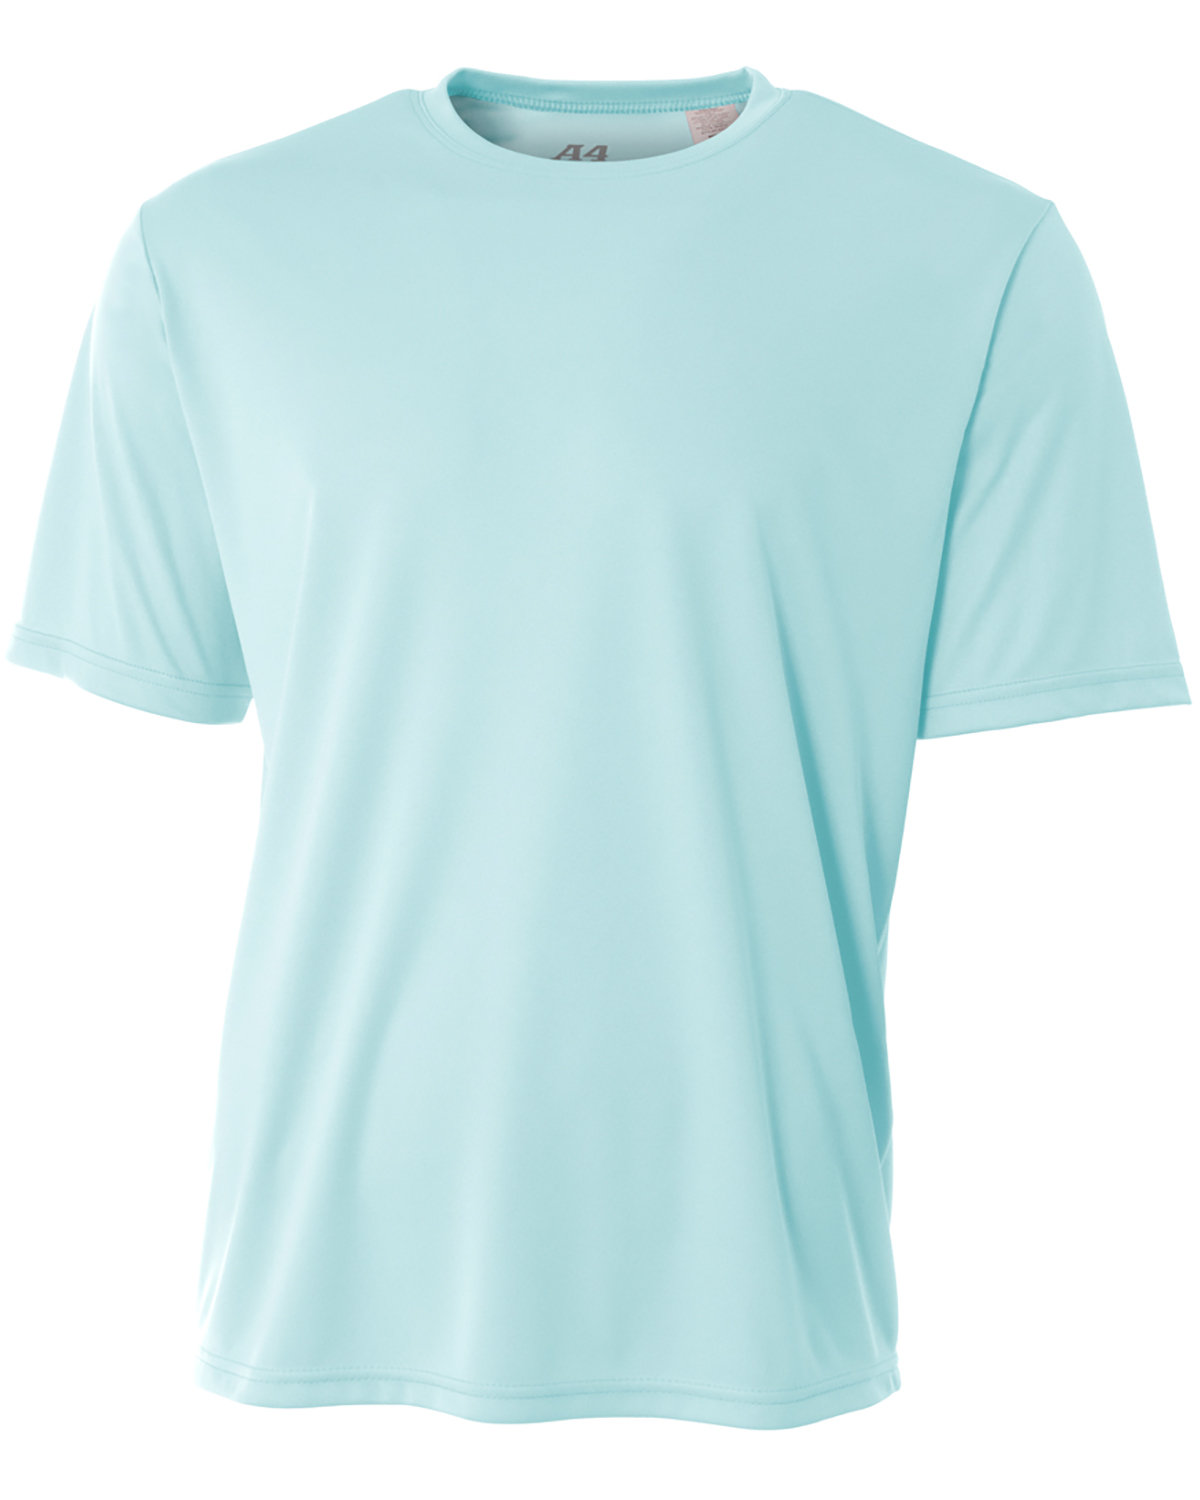 A4 Men's Cooling Performance T-Shirt PASTEL BLUE 